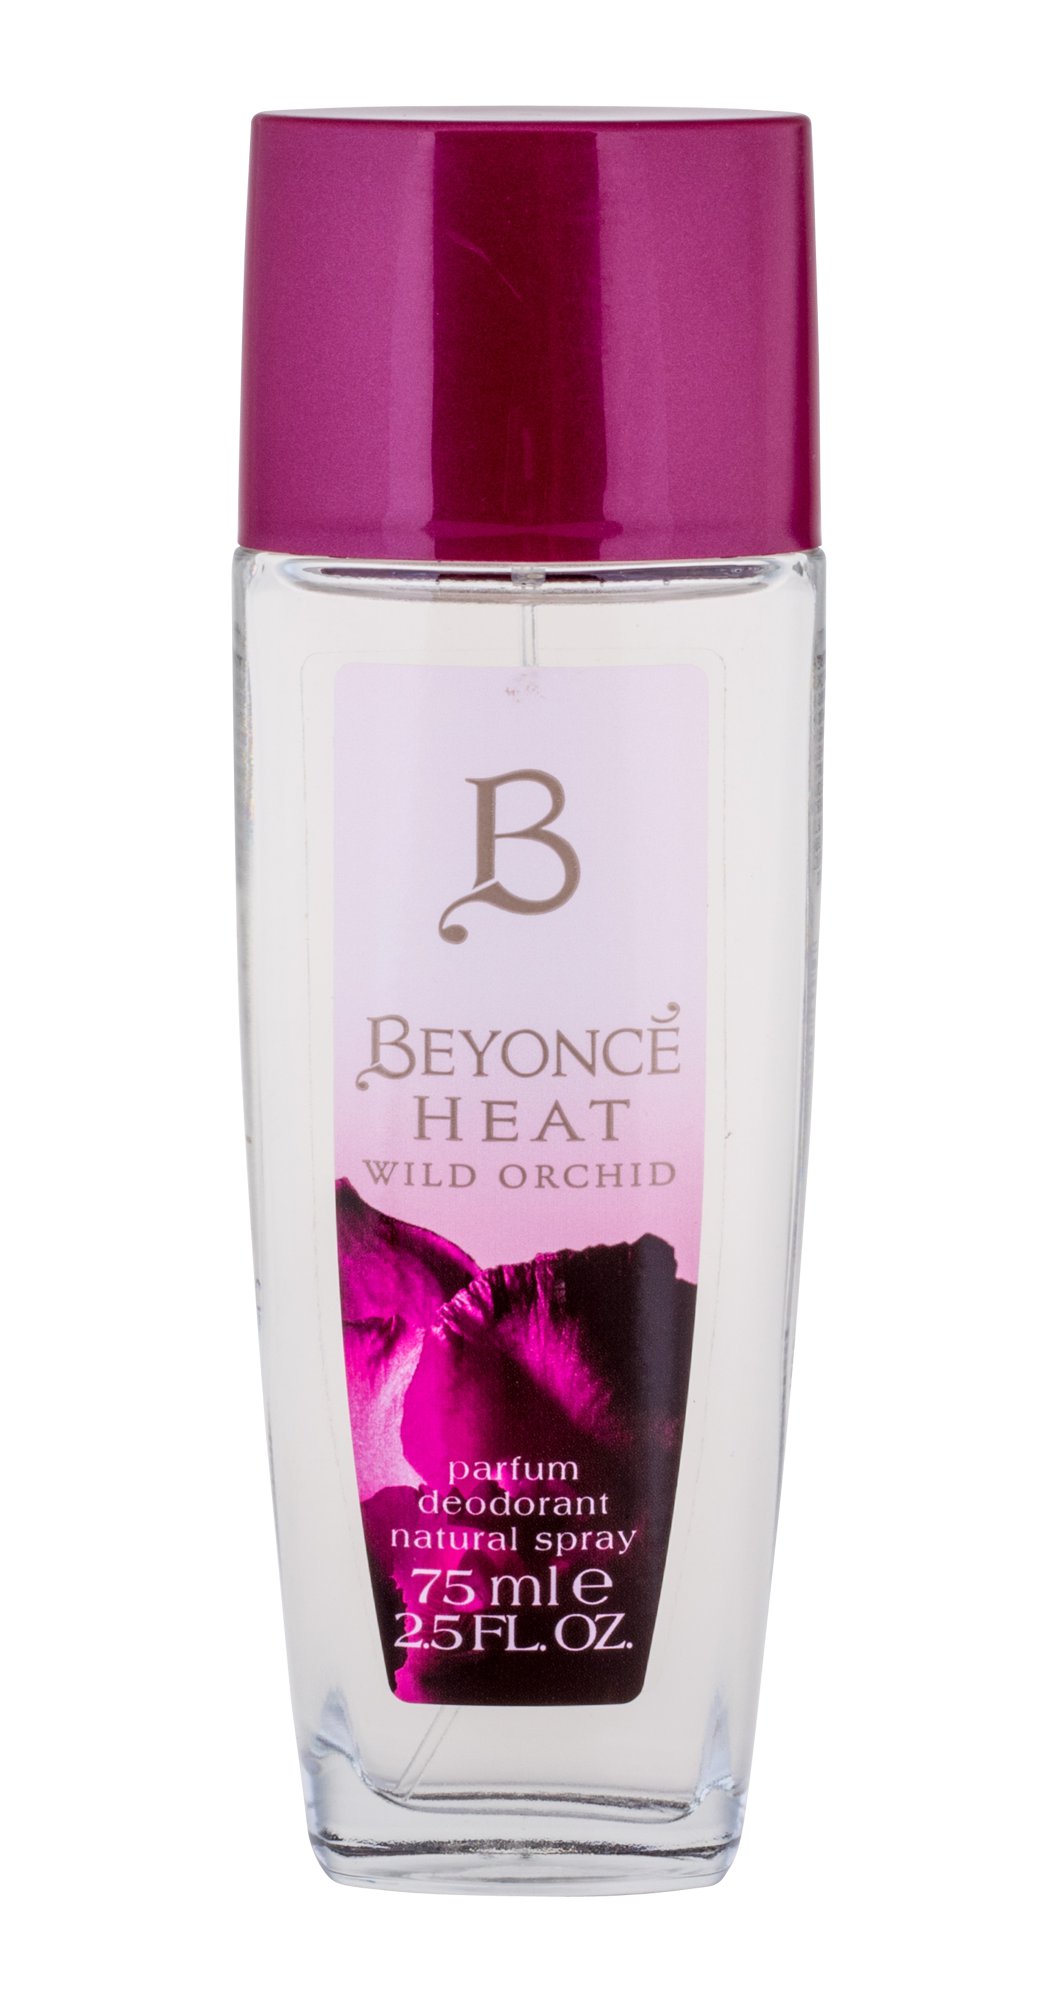 Beyonce Heat Wild Orchid, Deodorant v skle 75ml